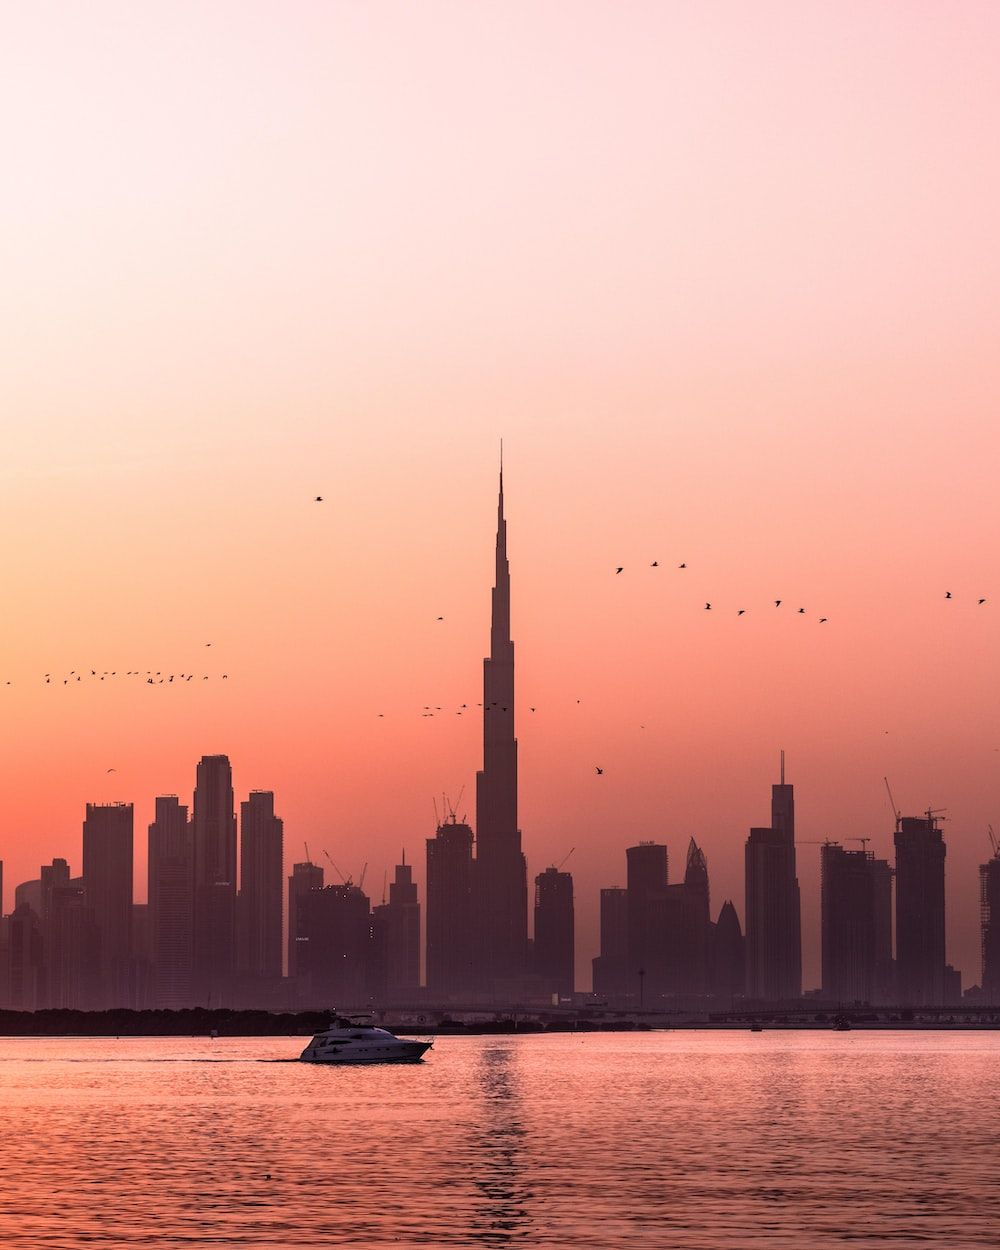 Dubai Skyline Picture. Download Free Image